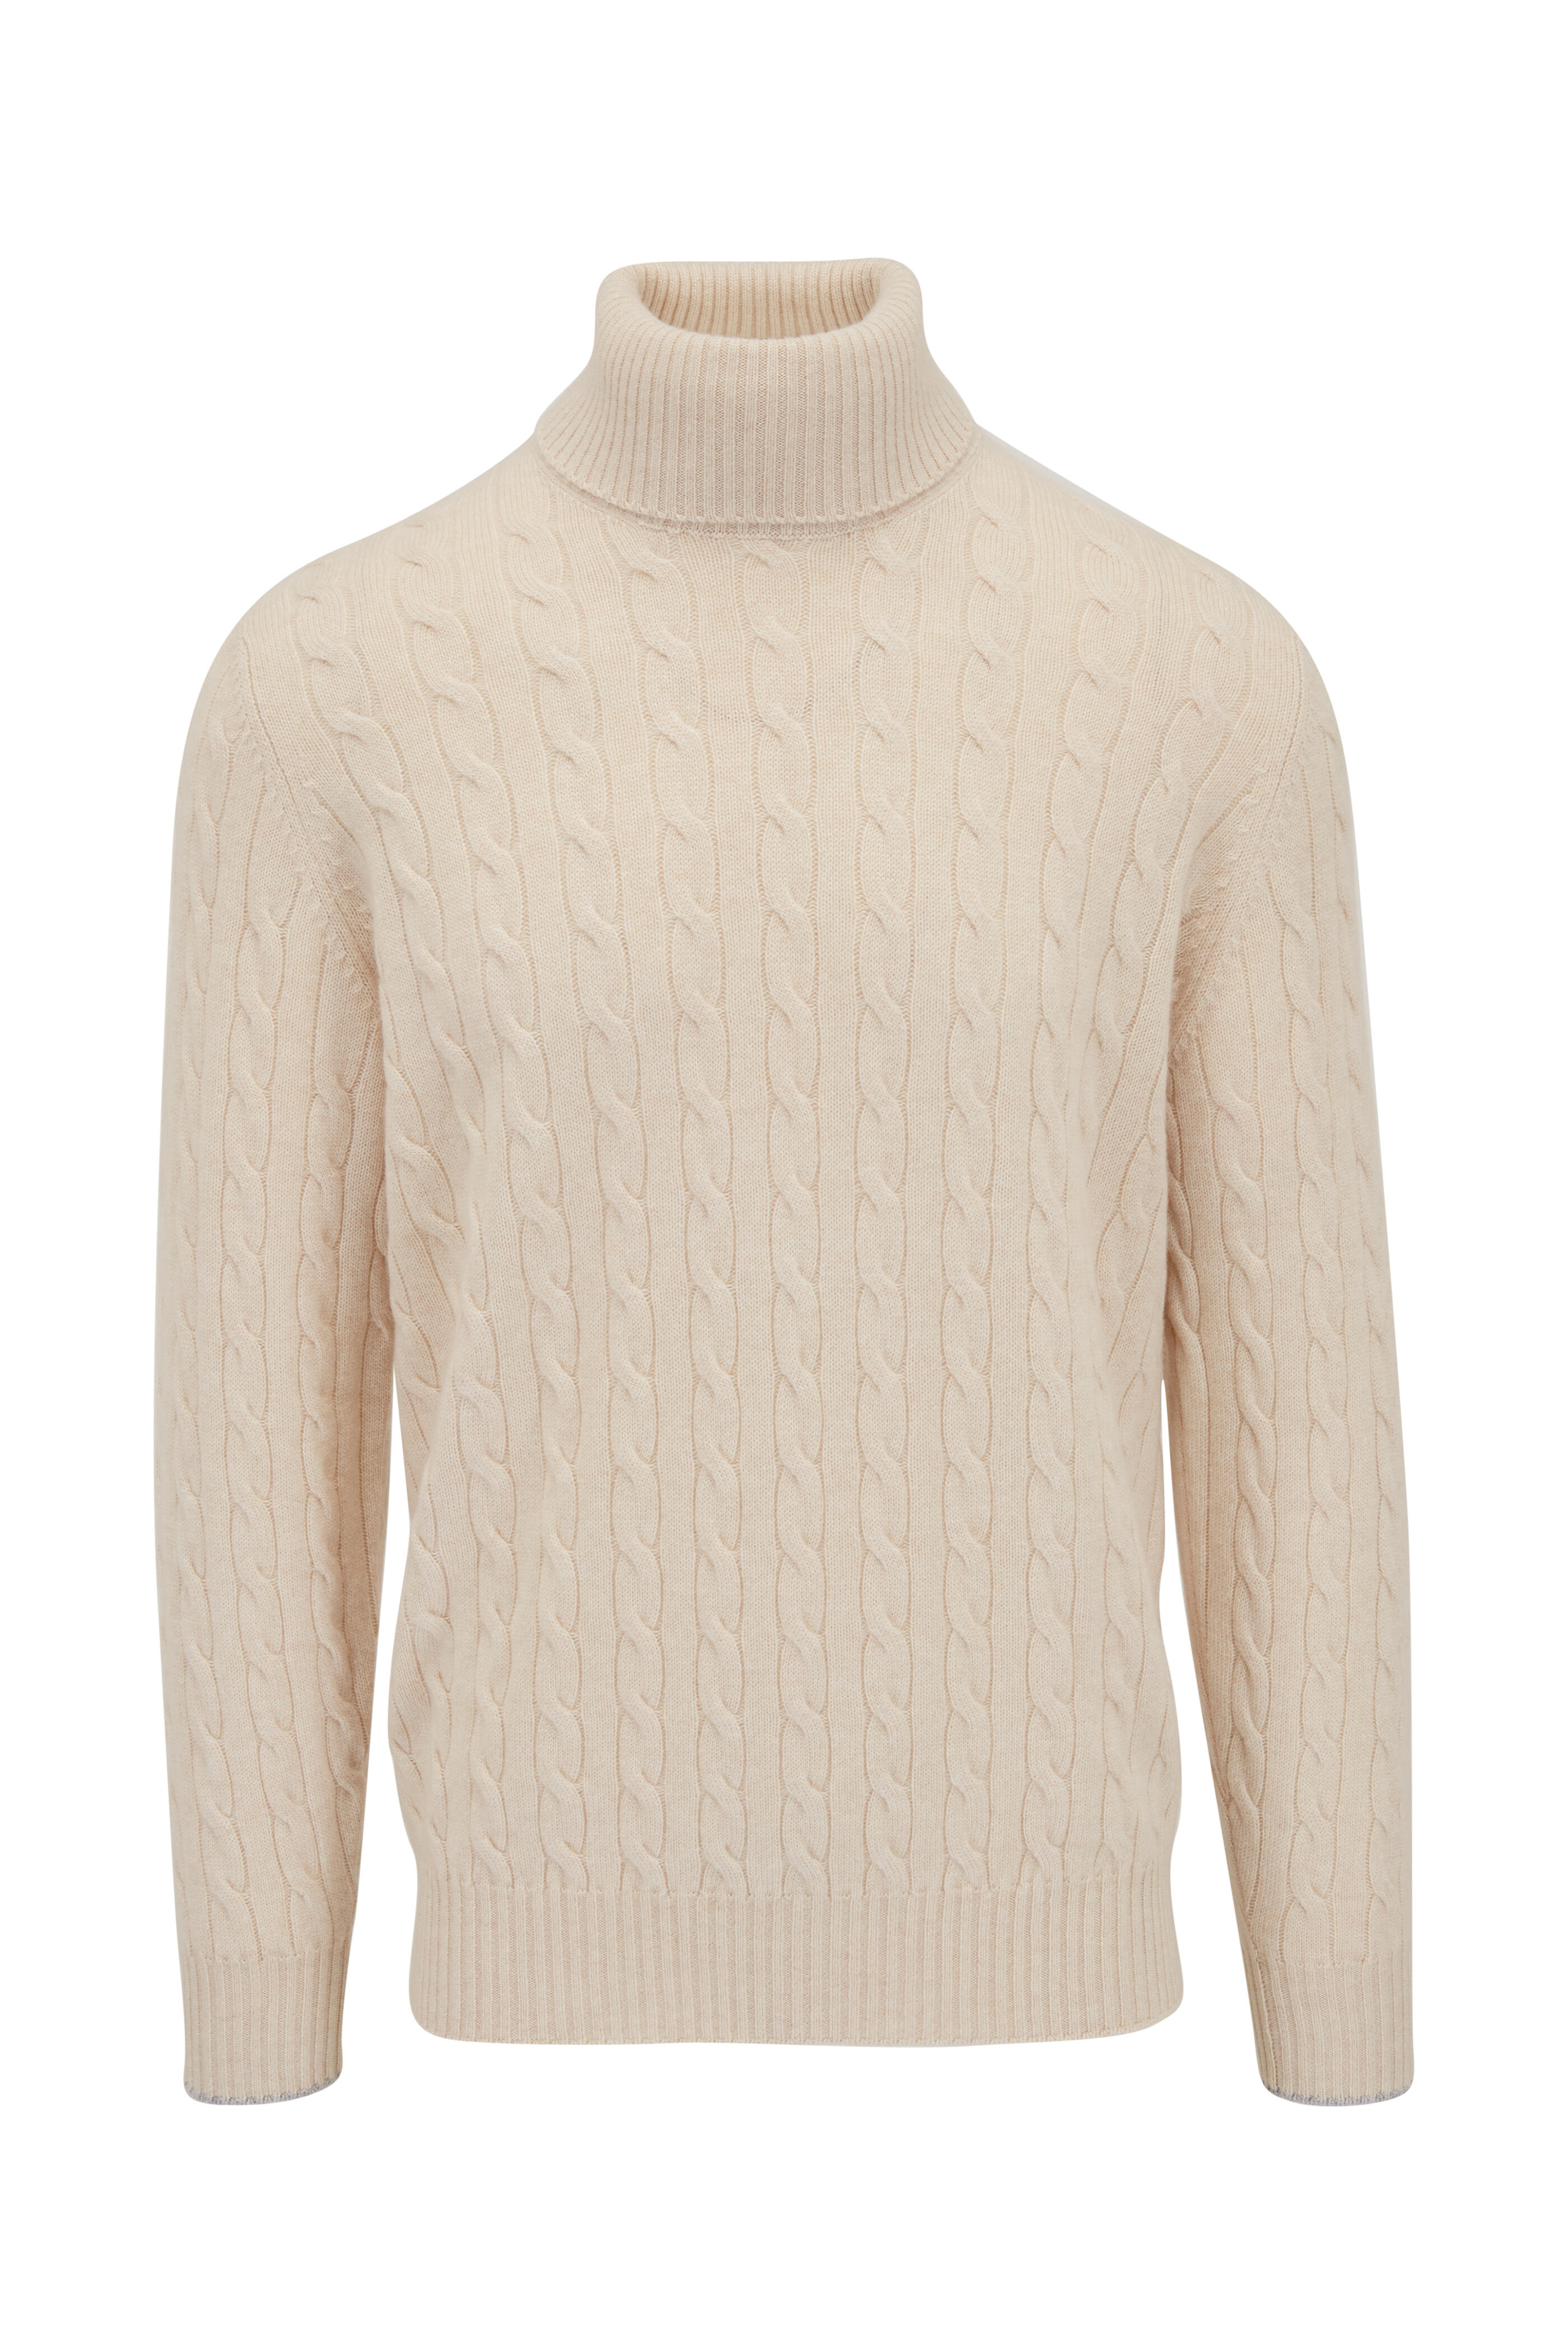 Brunello Cucinelli - Champagne Cashmere Cable Knit Turtleneck Sweater